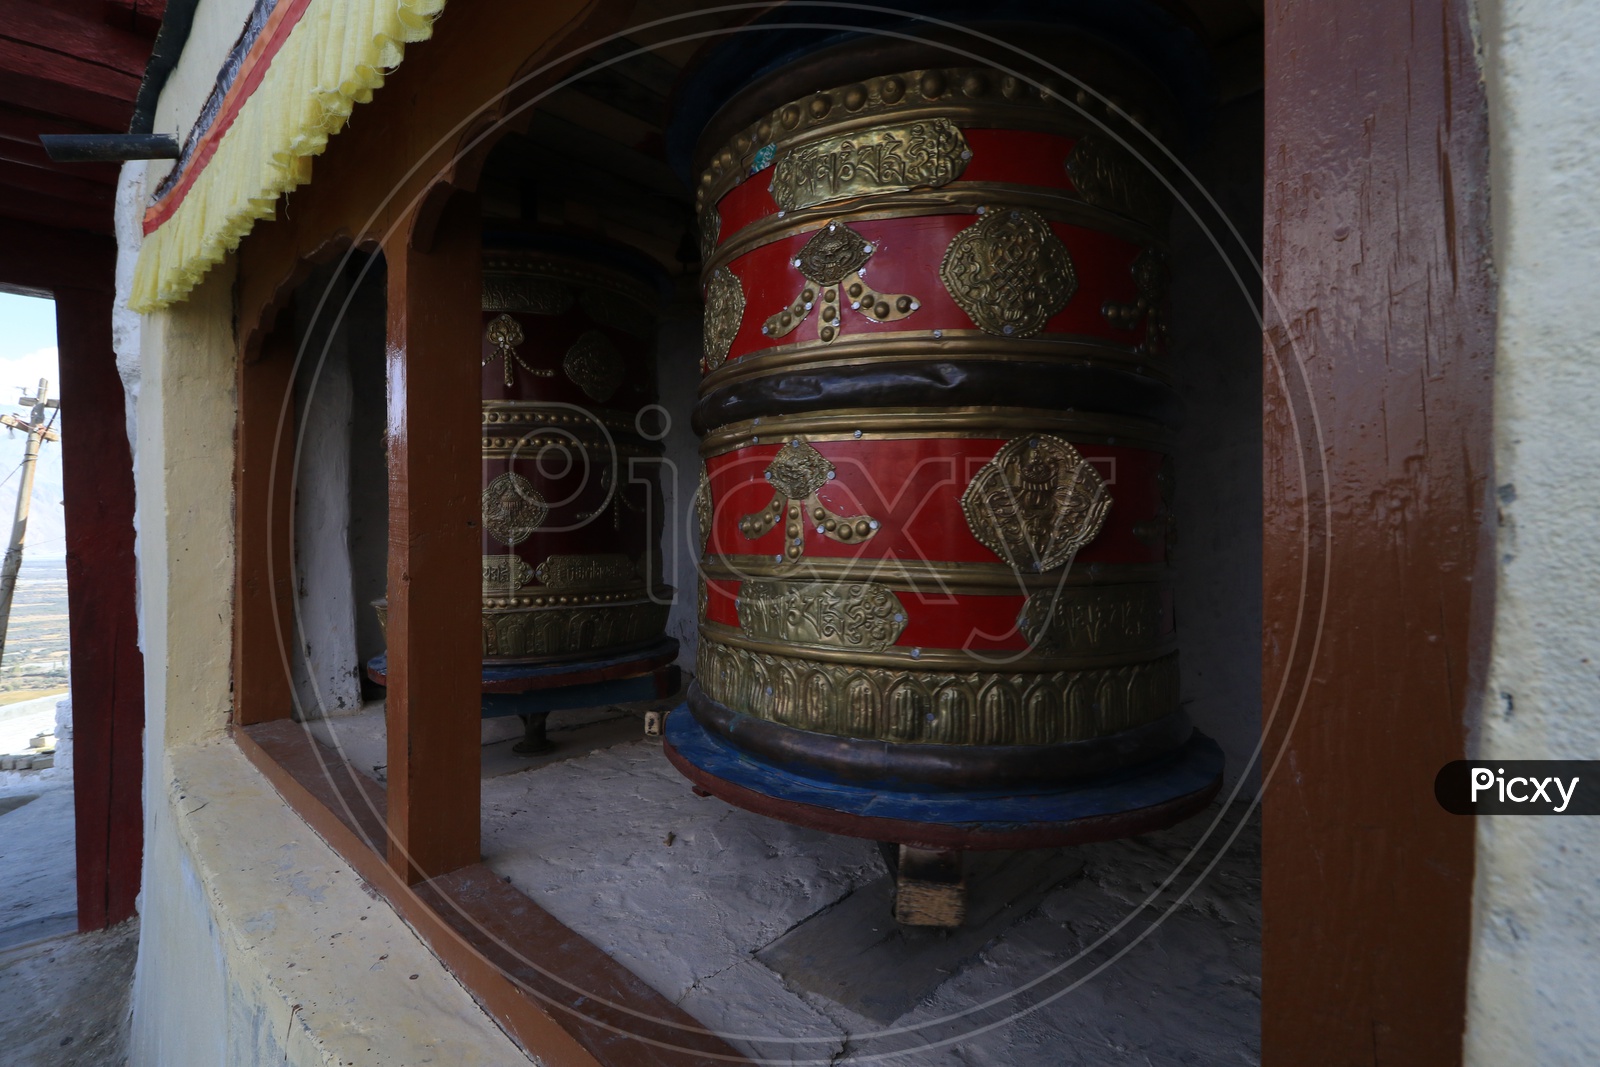 Tibetian Prayer Bells in Buddhist Temples